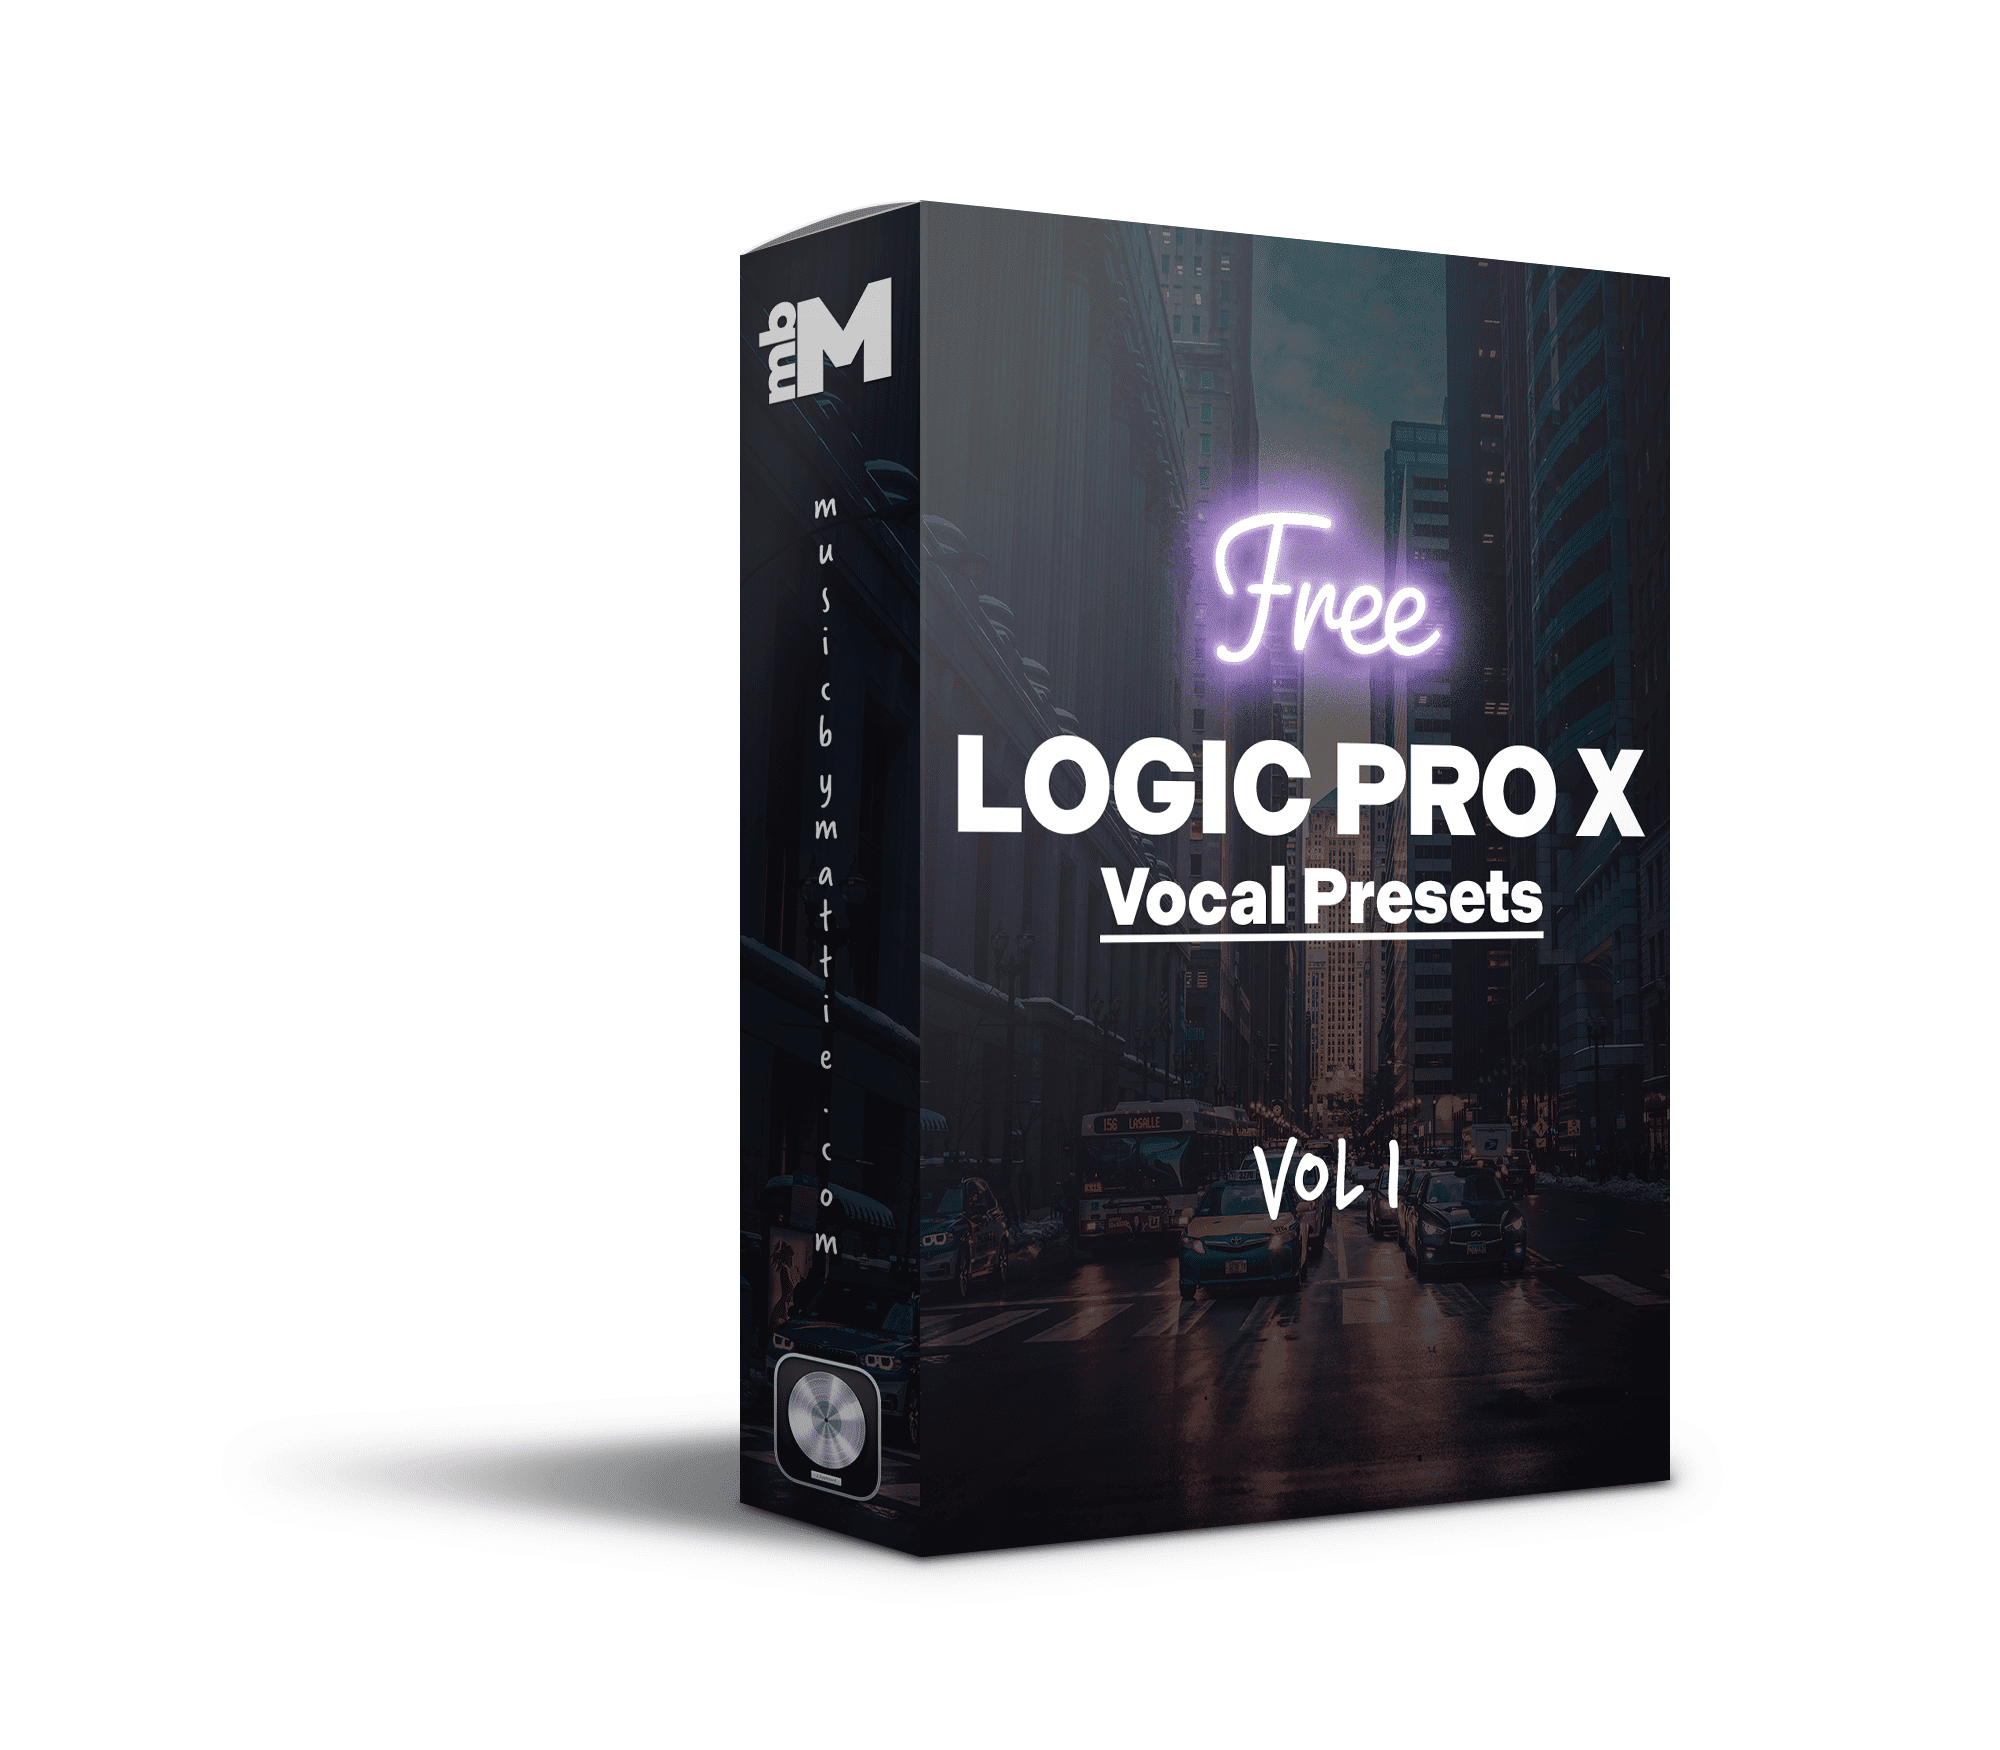 tory lanez vocal presets free download logic pro x